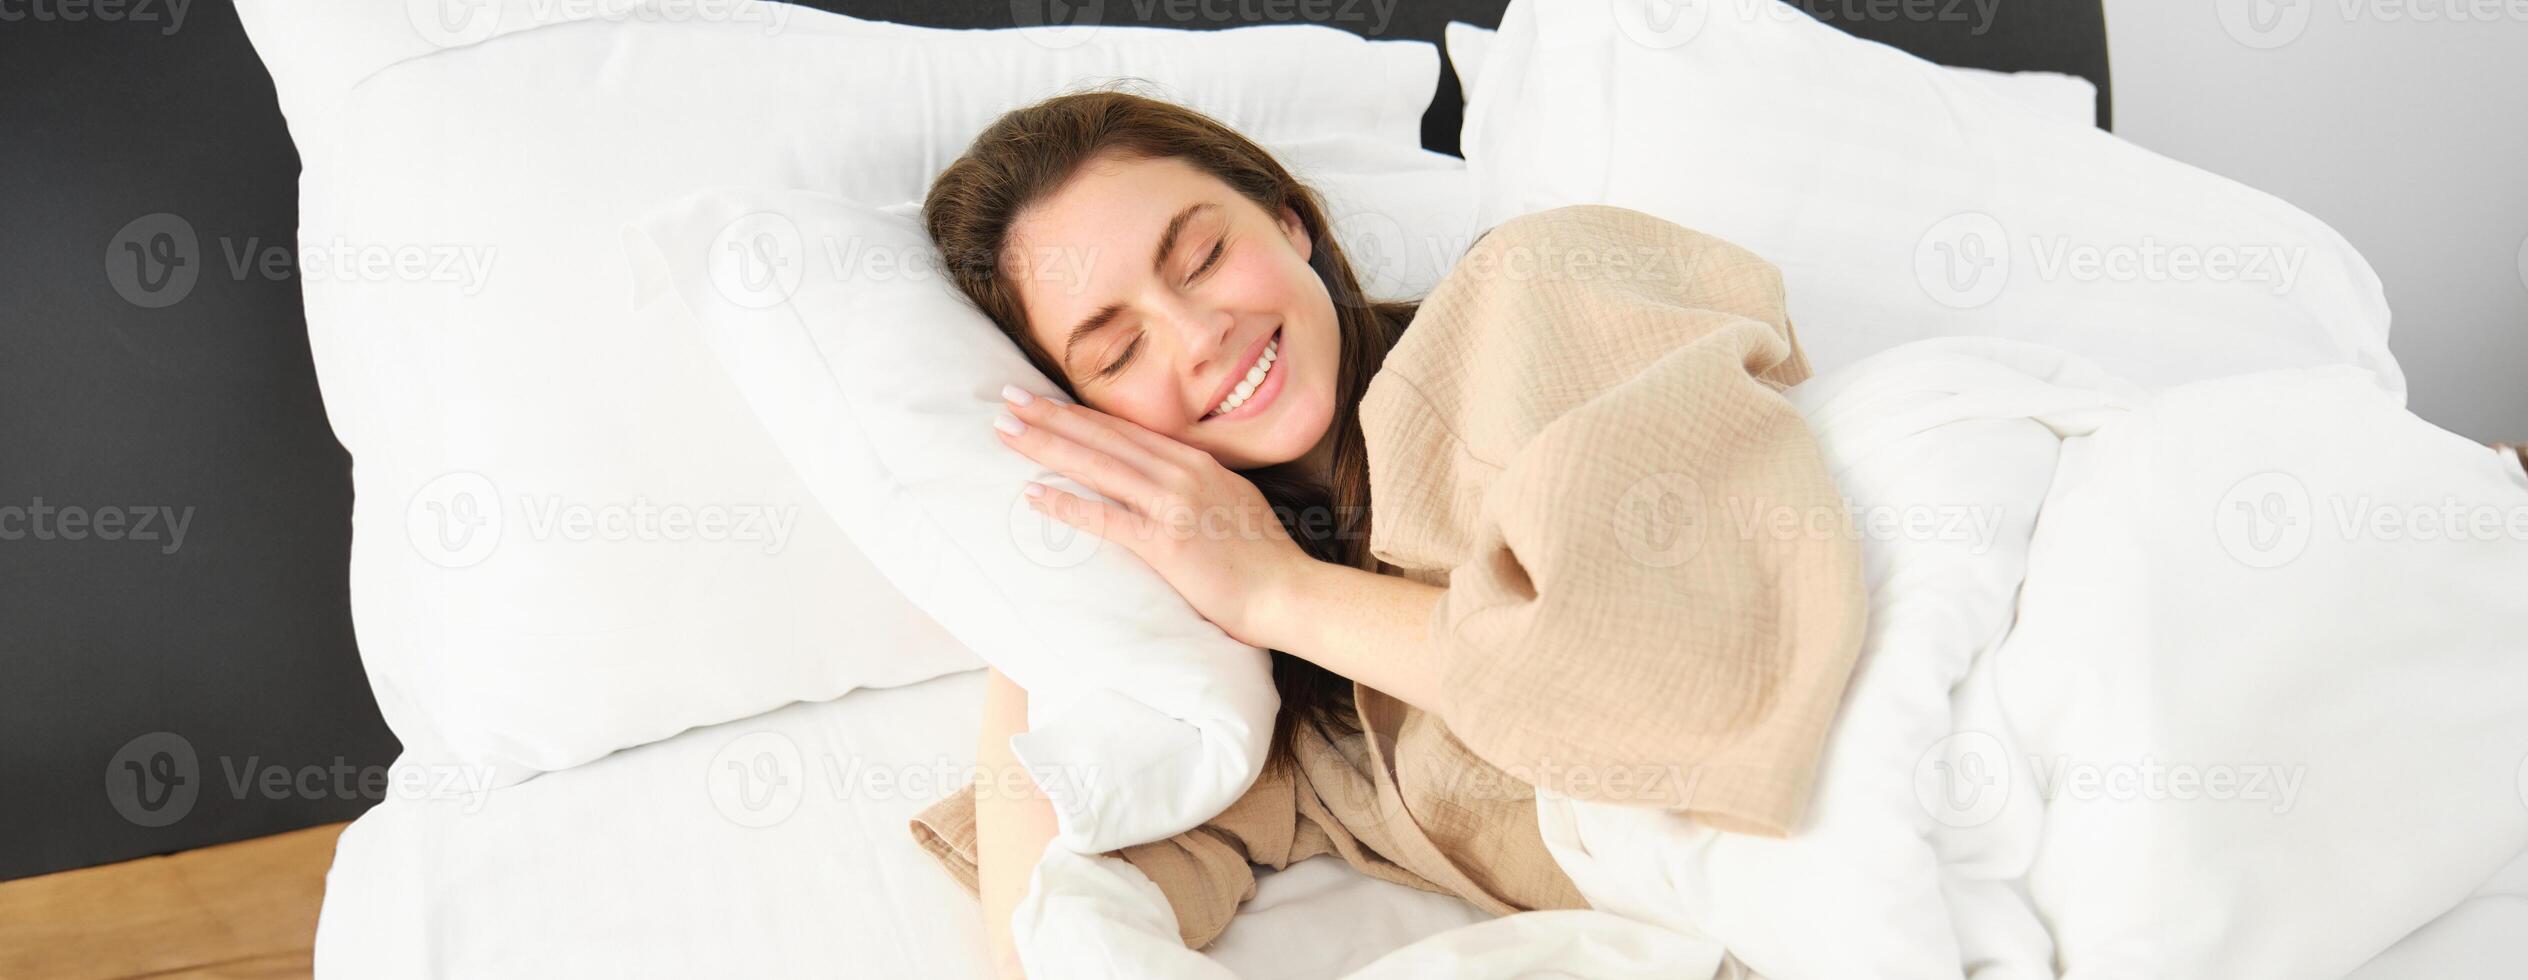 Portrait of smiling brunette woman in pyjamas, sleeping in hotel bed, relaxing with pleased face, dreaming, sleeping in bedroom photo